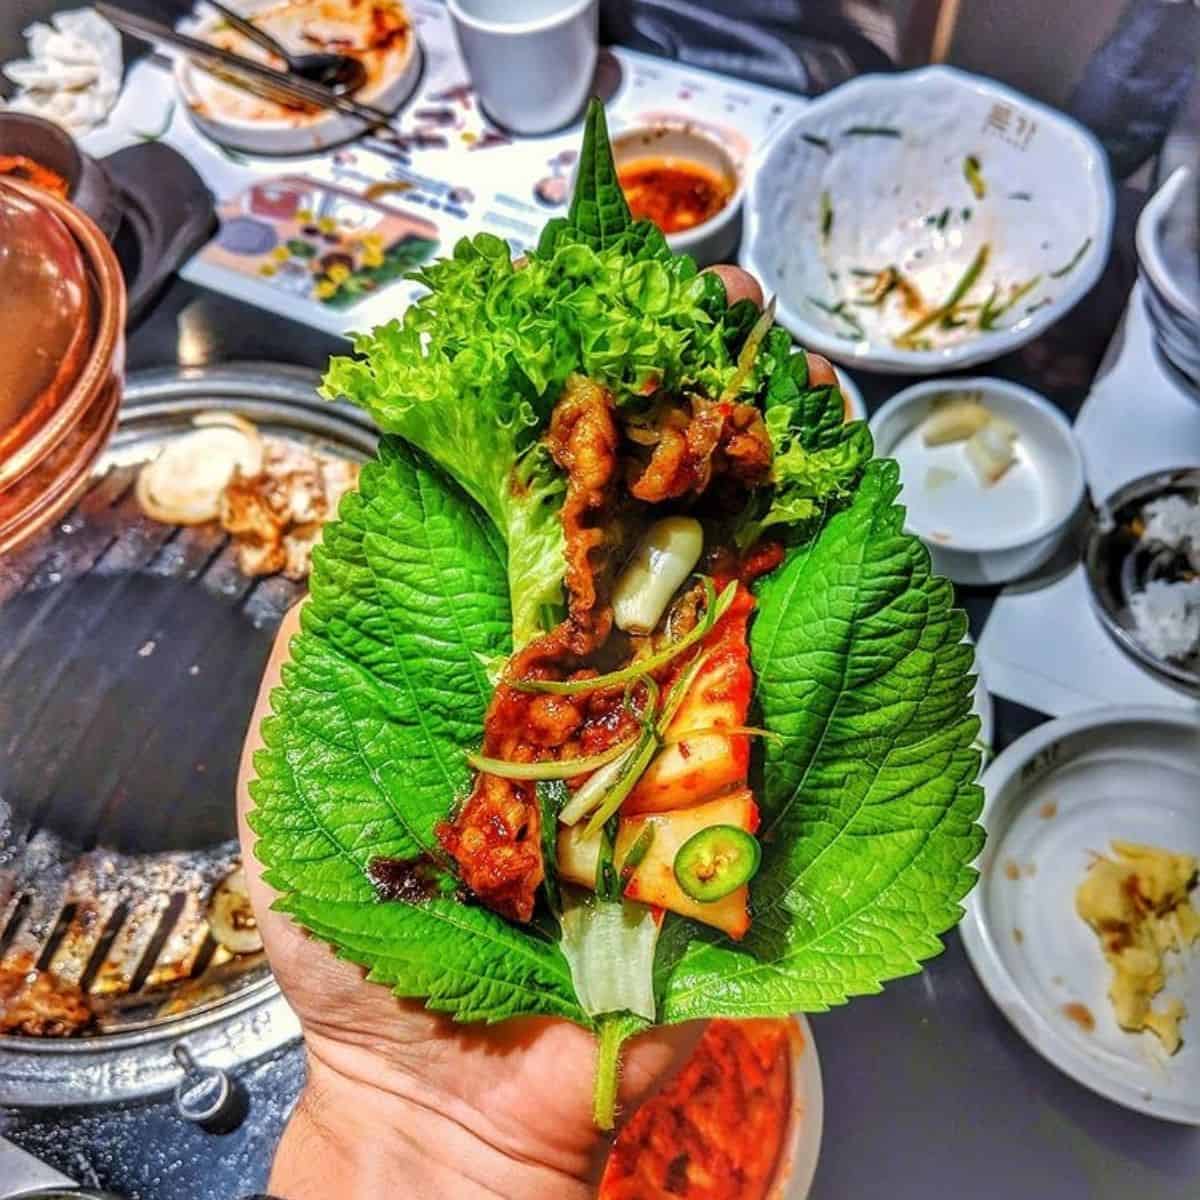 https://www.honestfoodtalks.com/wp-content/uploads/2022/03/Marinated-beef-brisket-with-kimchi-lettuce-and-perilla-leaf.jpg